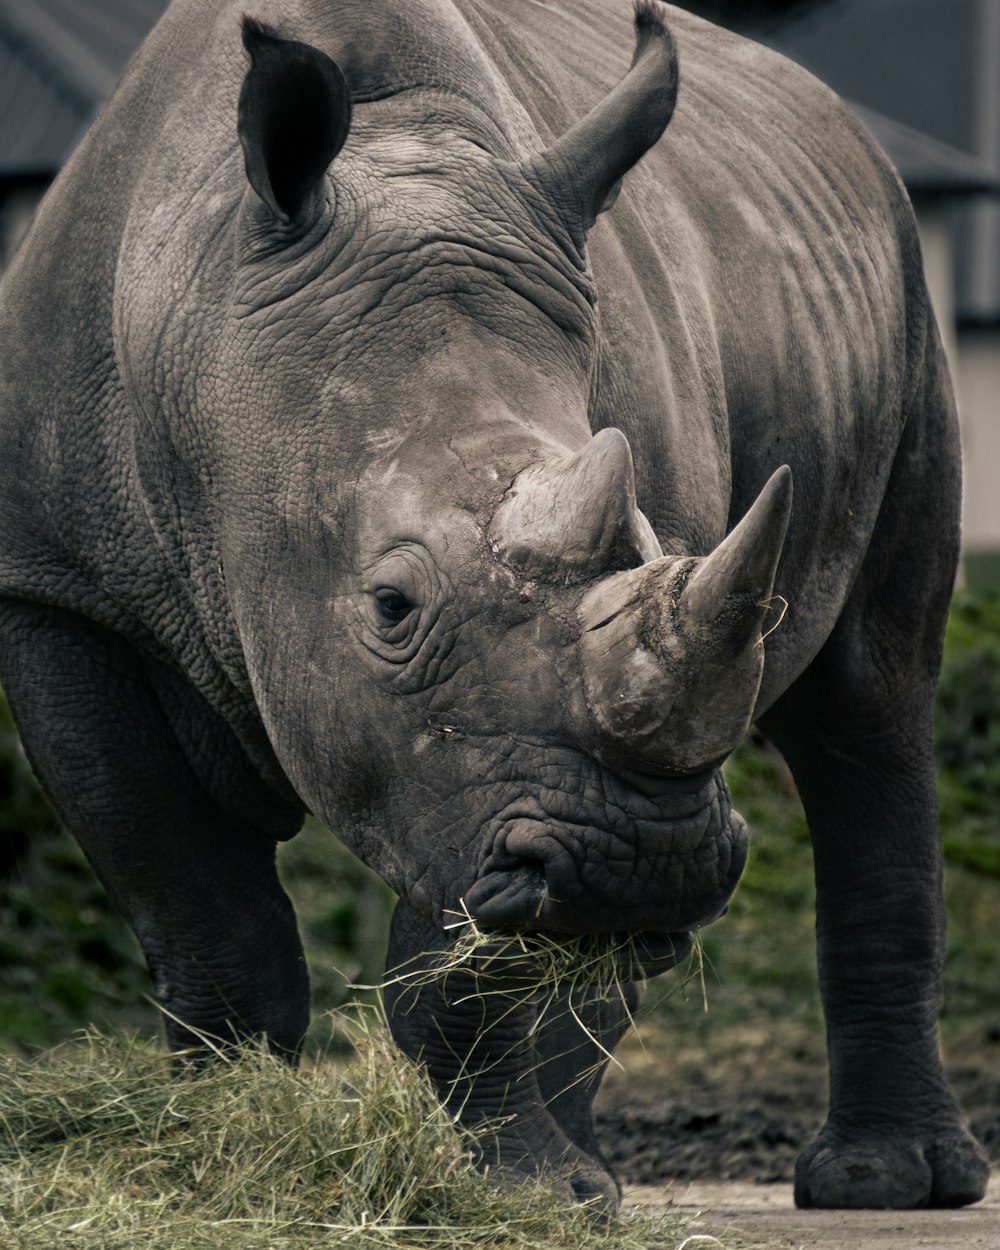 grey rhinoceros on green grass during daytime